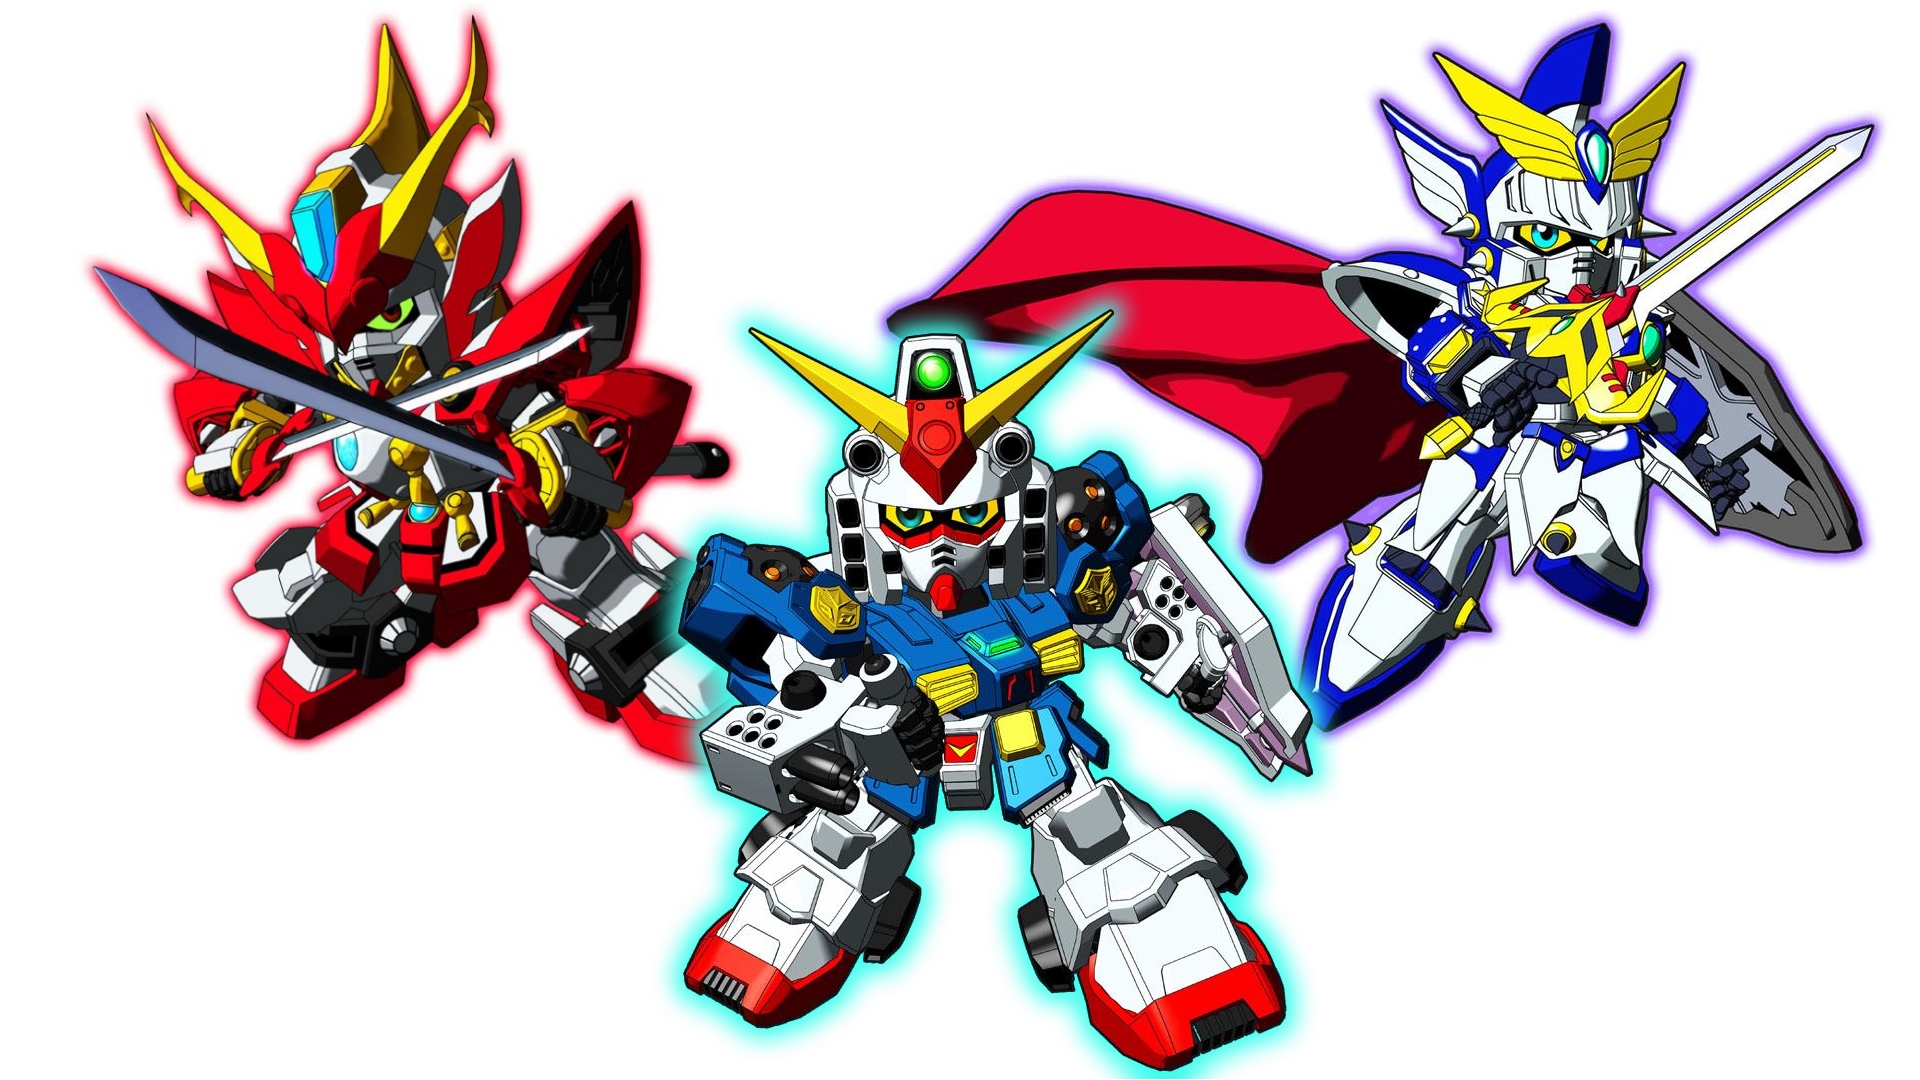 SD Gundam Force: Showdown!